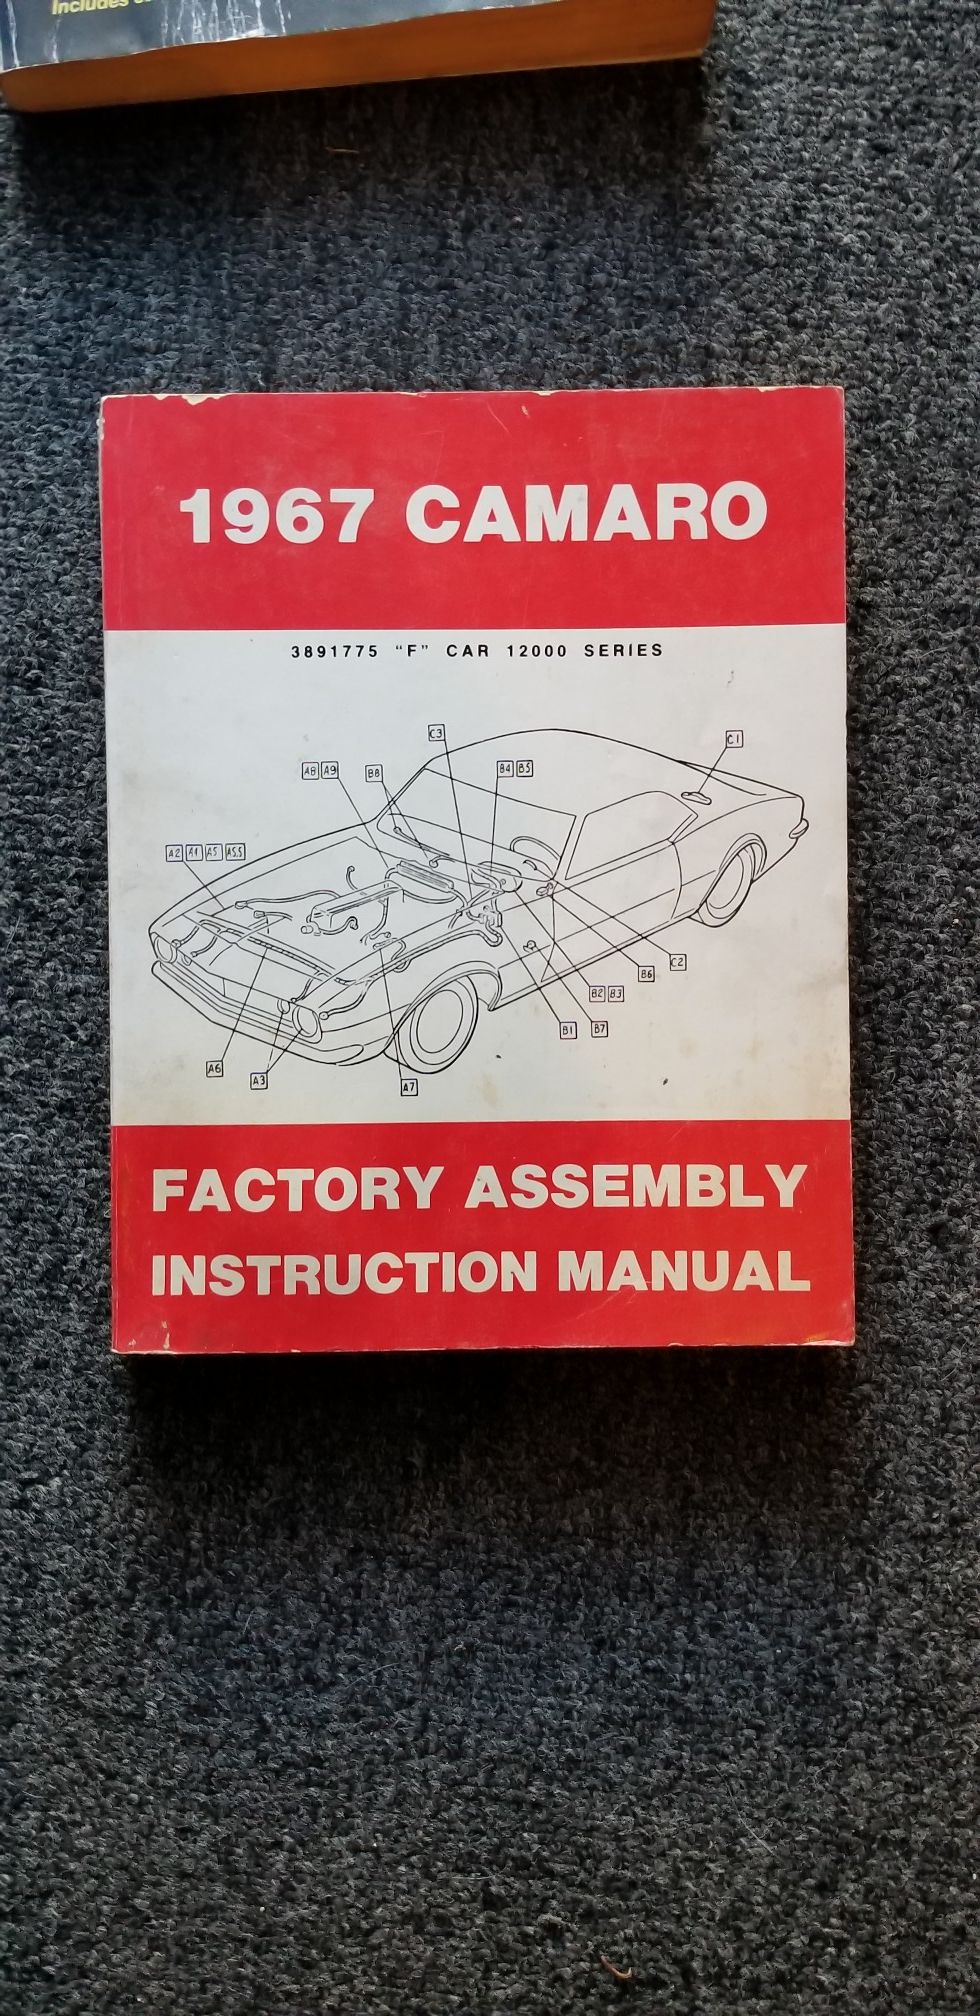 Camaro factory assembly manual 1967